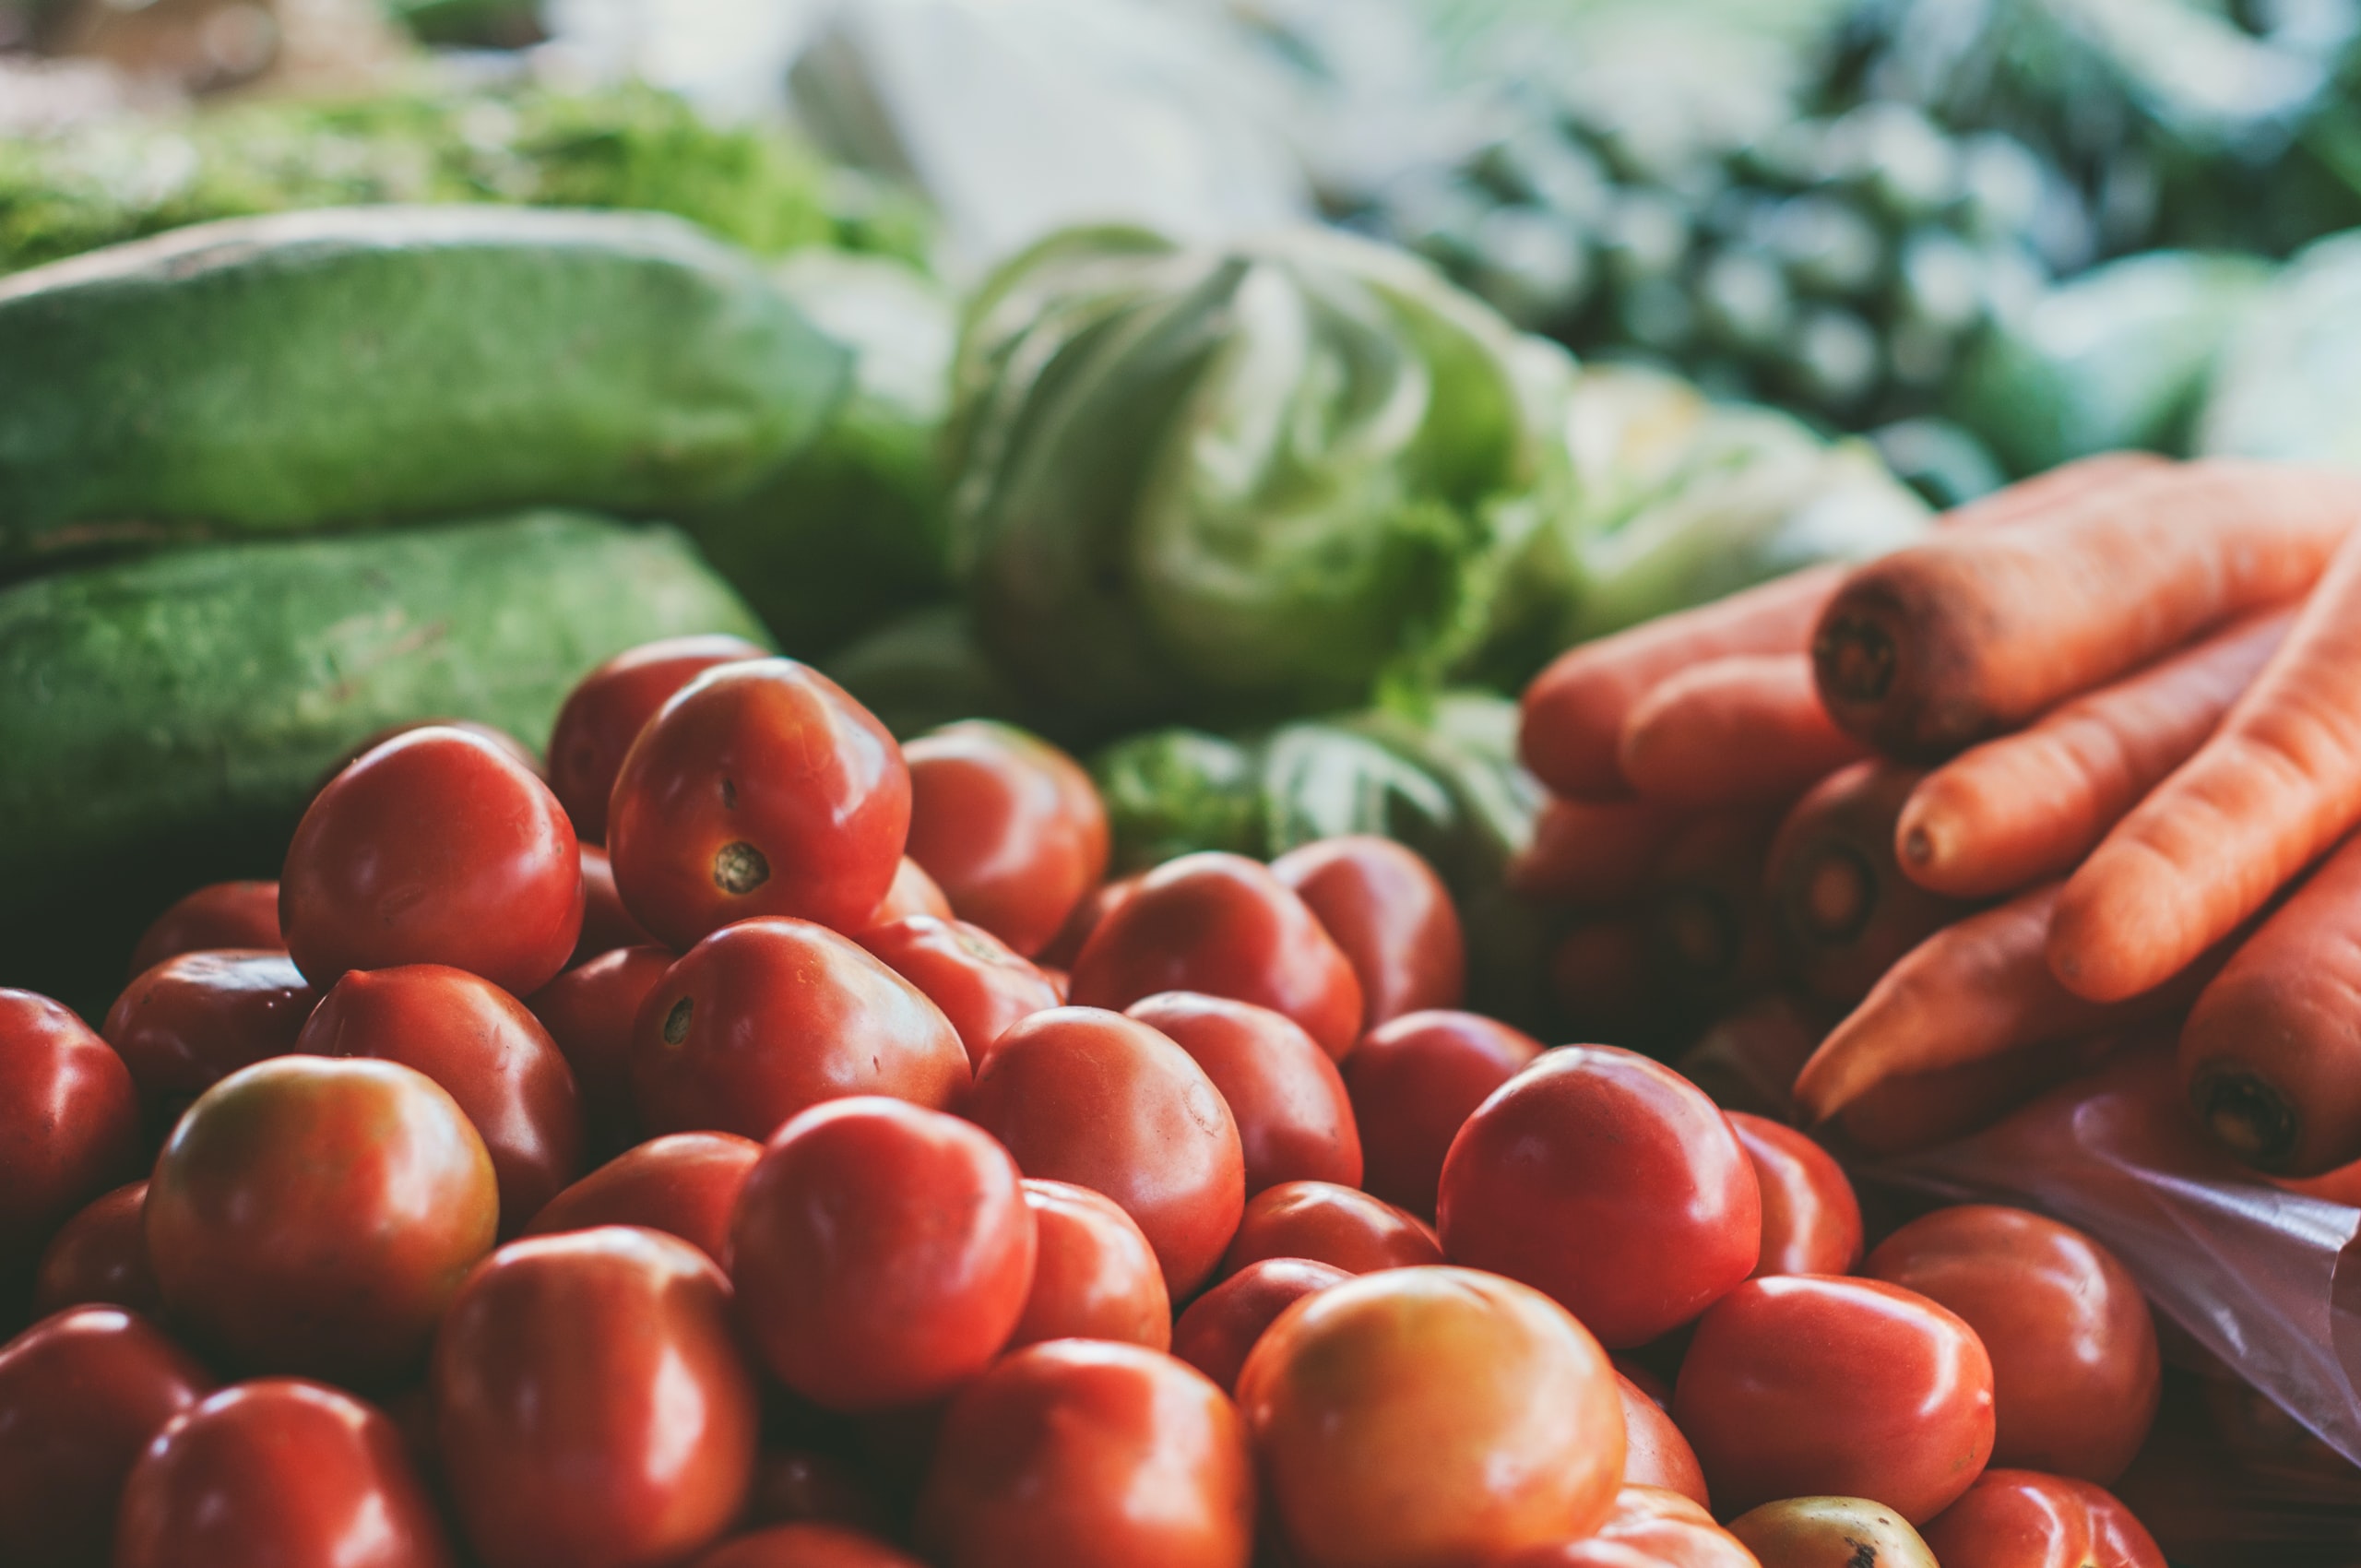 Surbiton Farmers’ Market gets green light to reopen